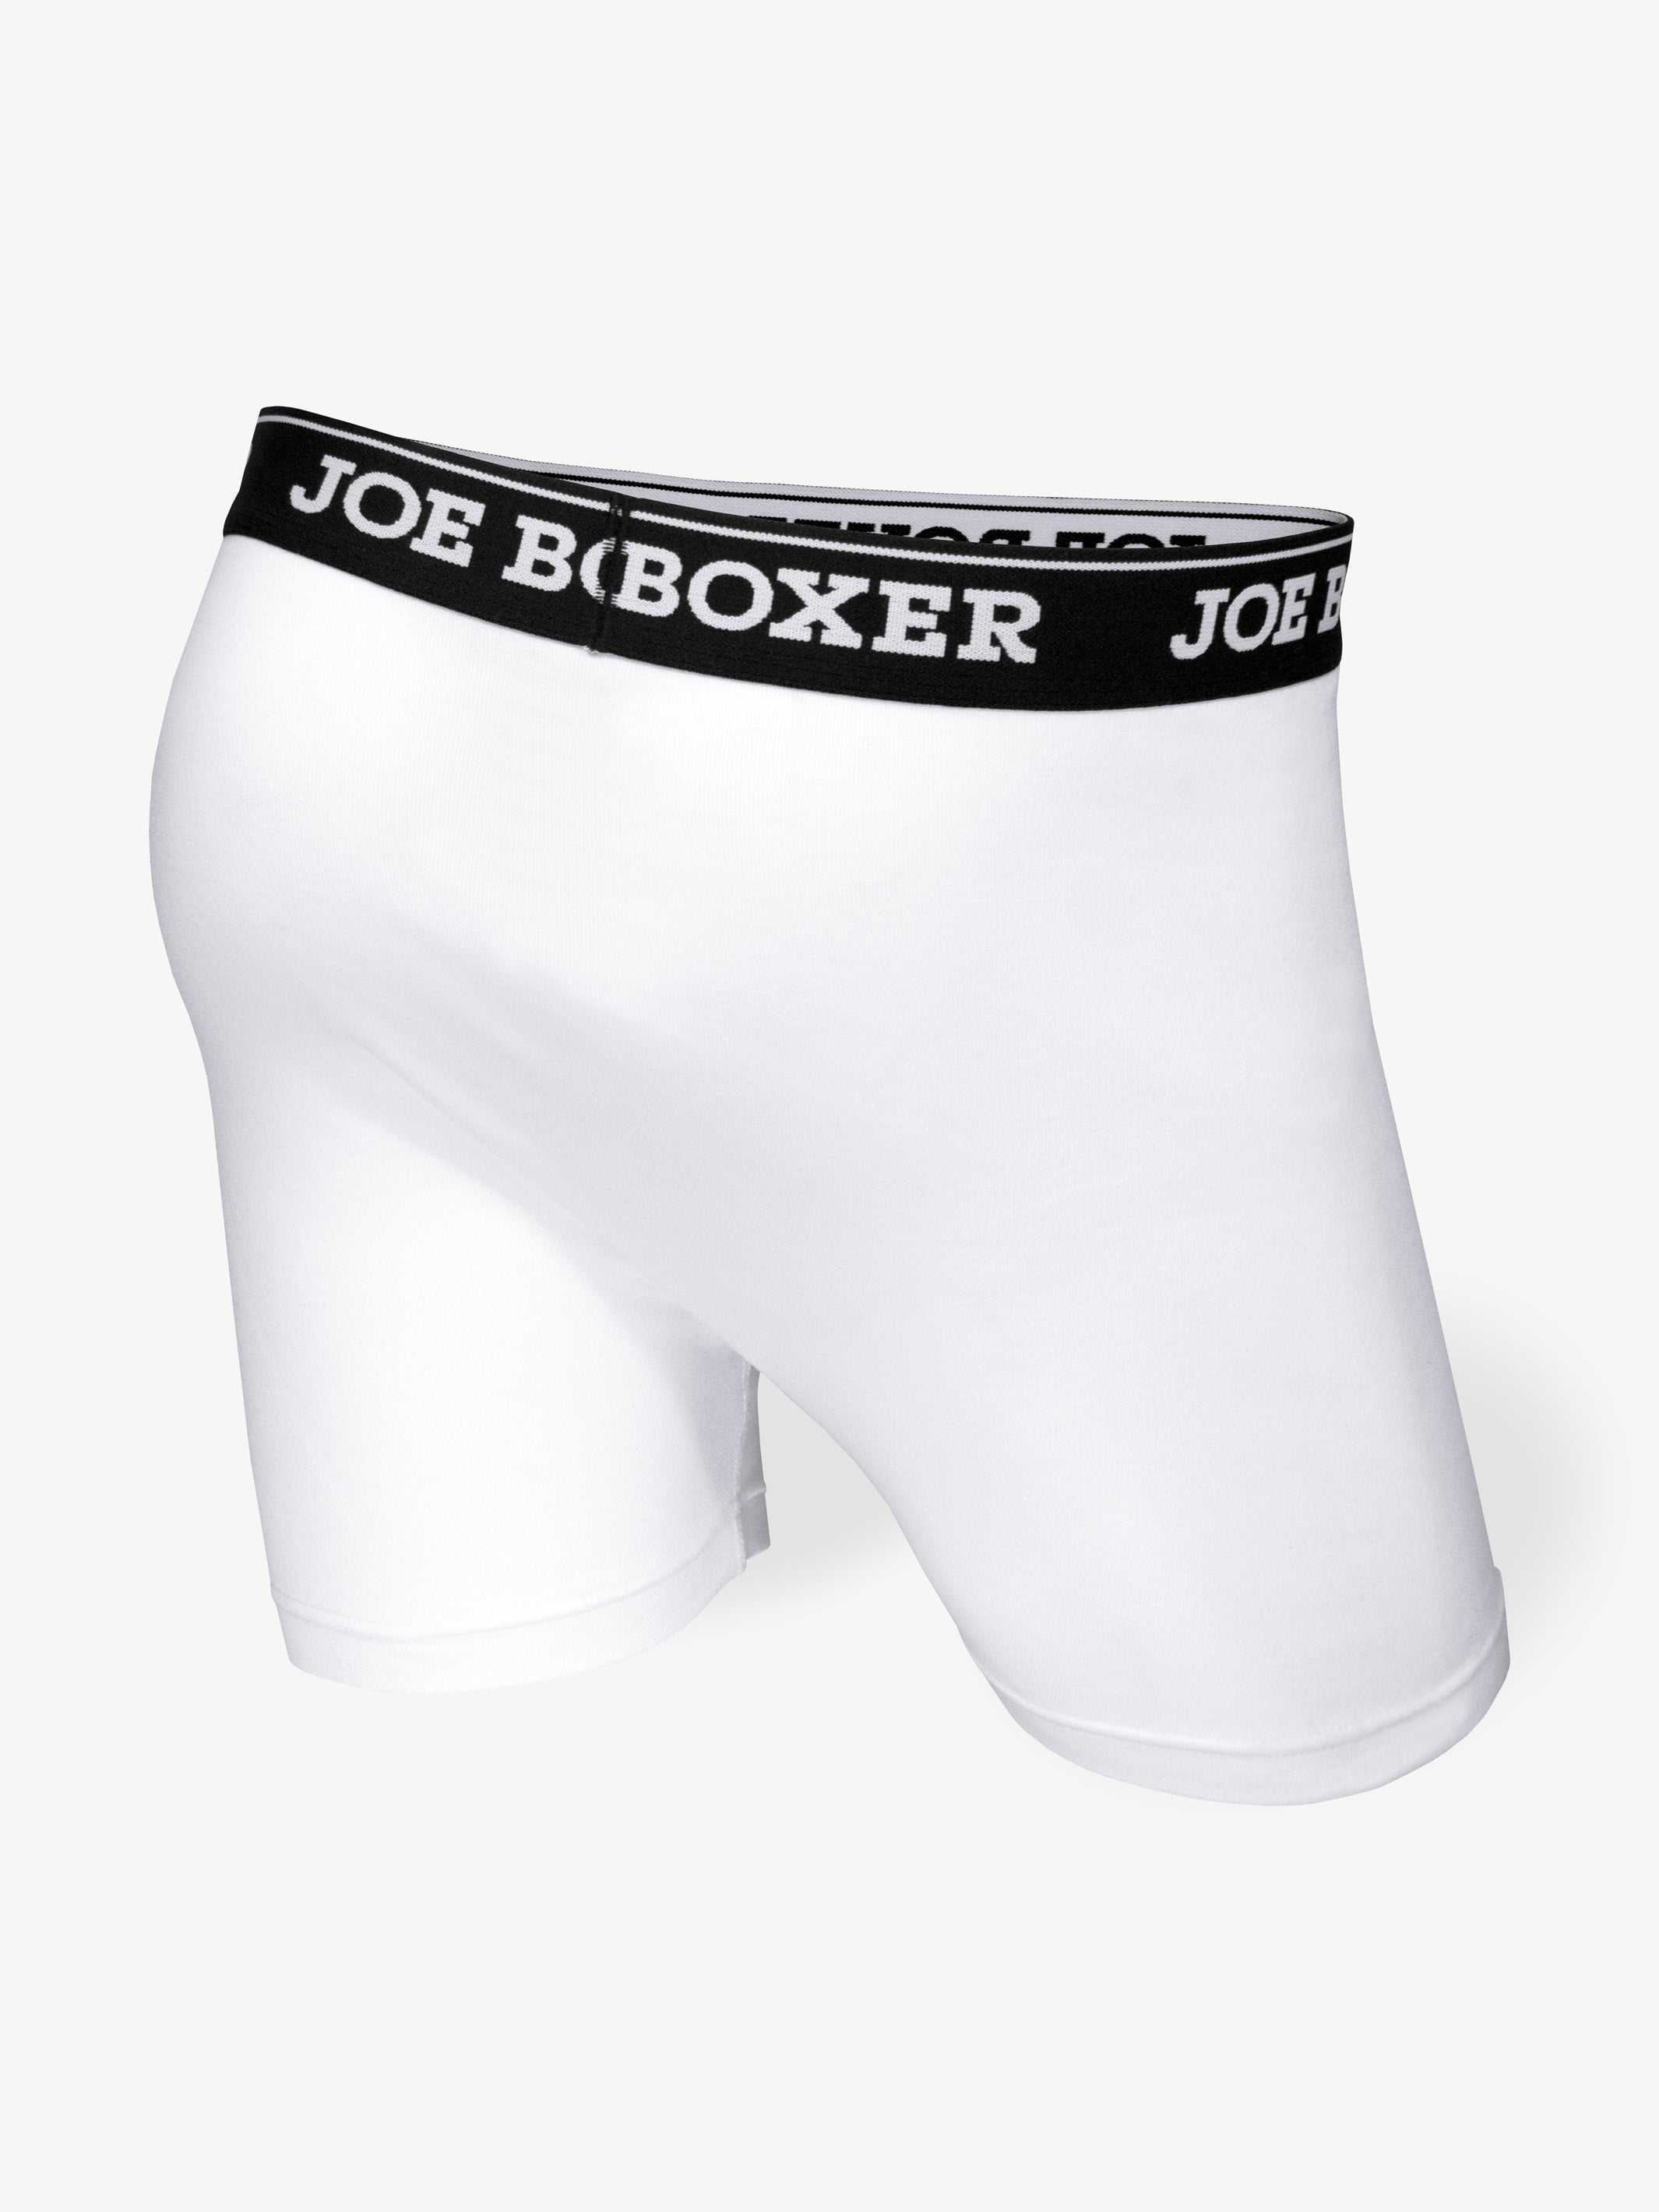 Vintage Joe Boxer Men’s Boxer Brief Underwear White 1 Pair Size Small  Cotton NOS